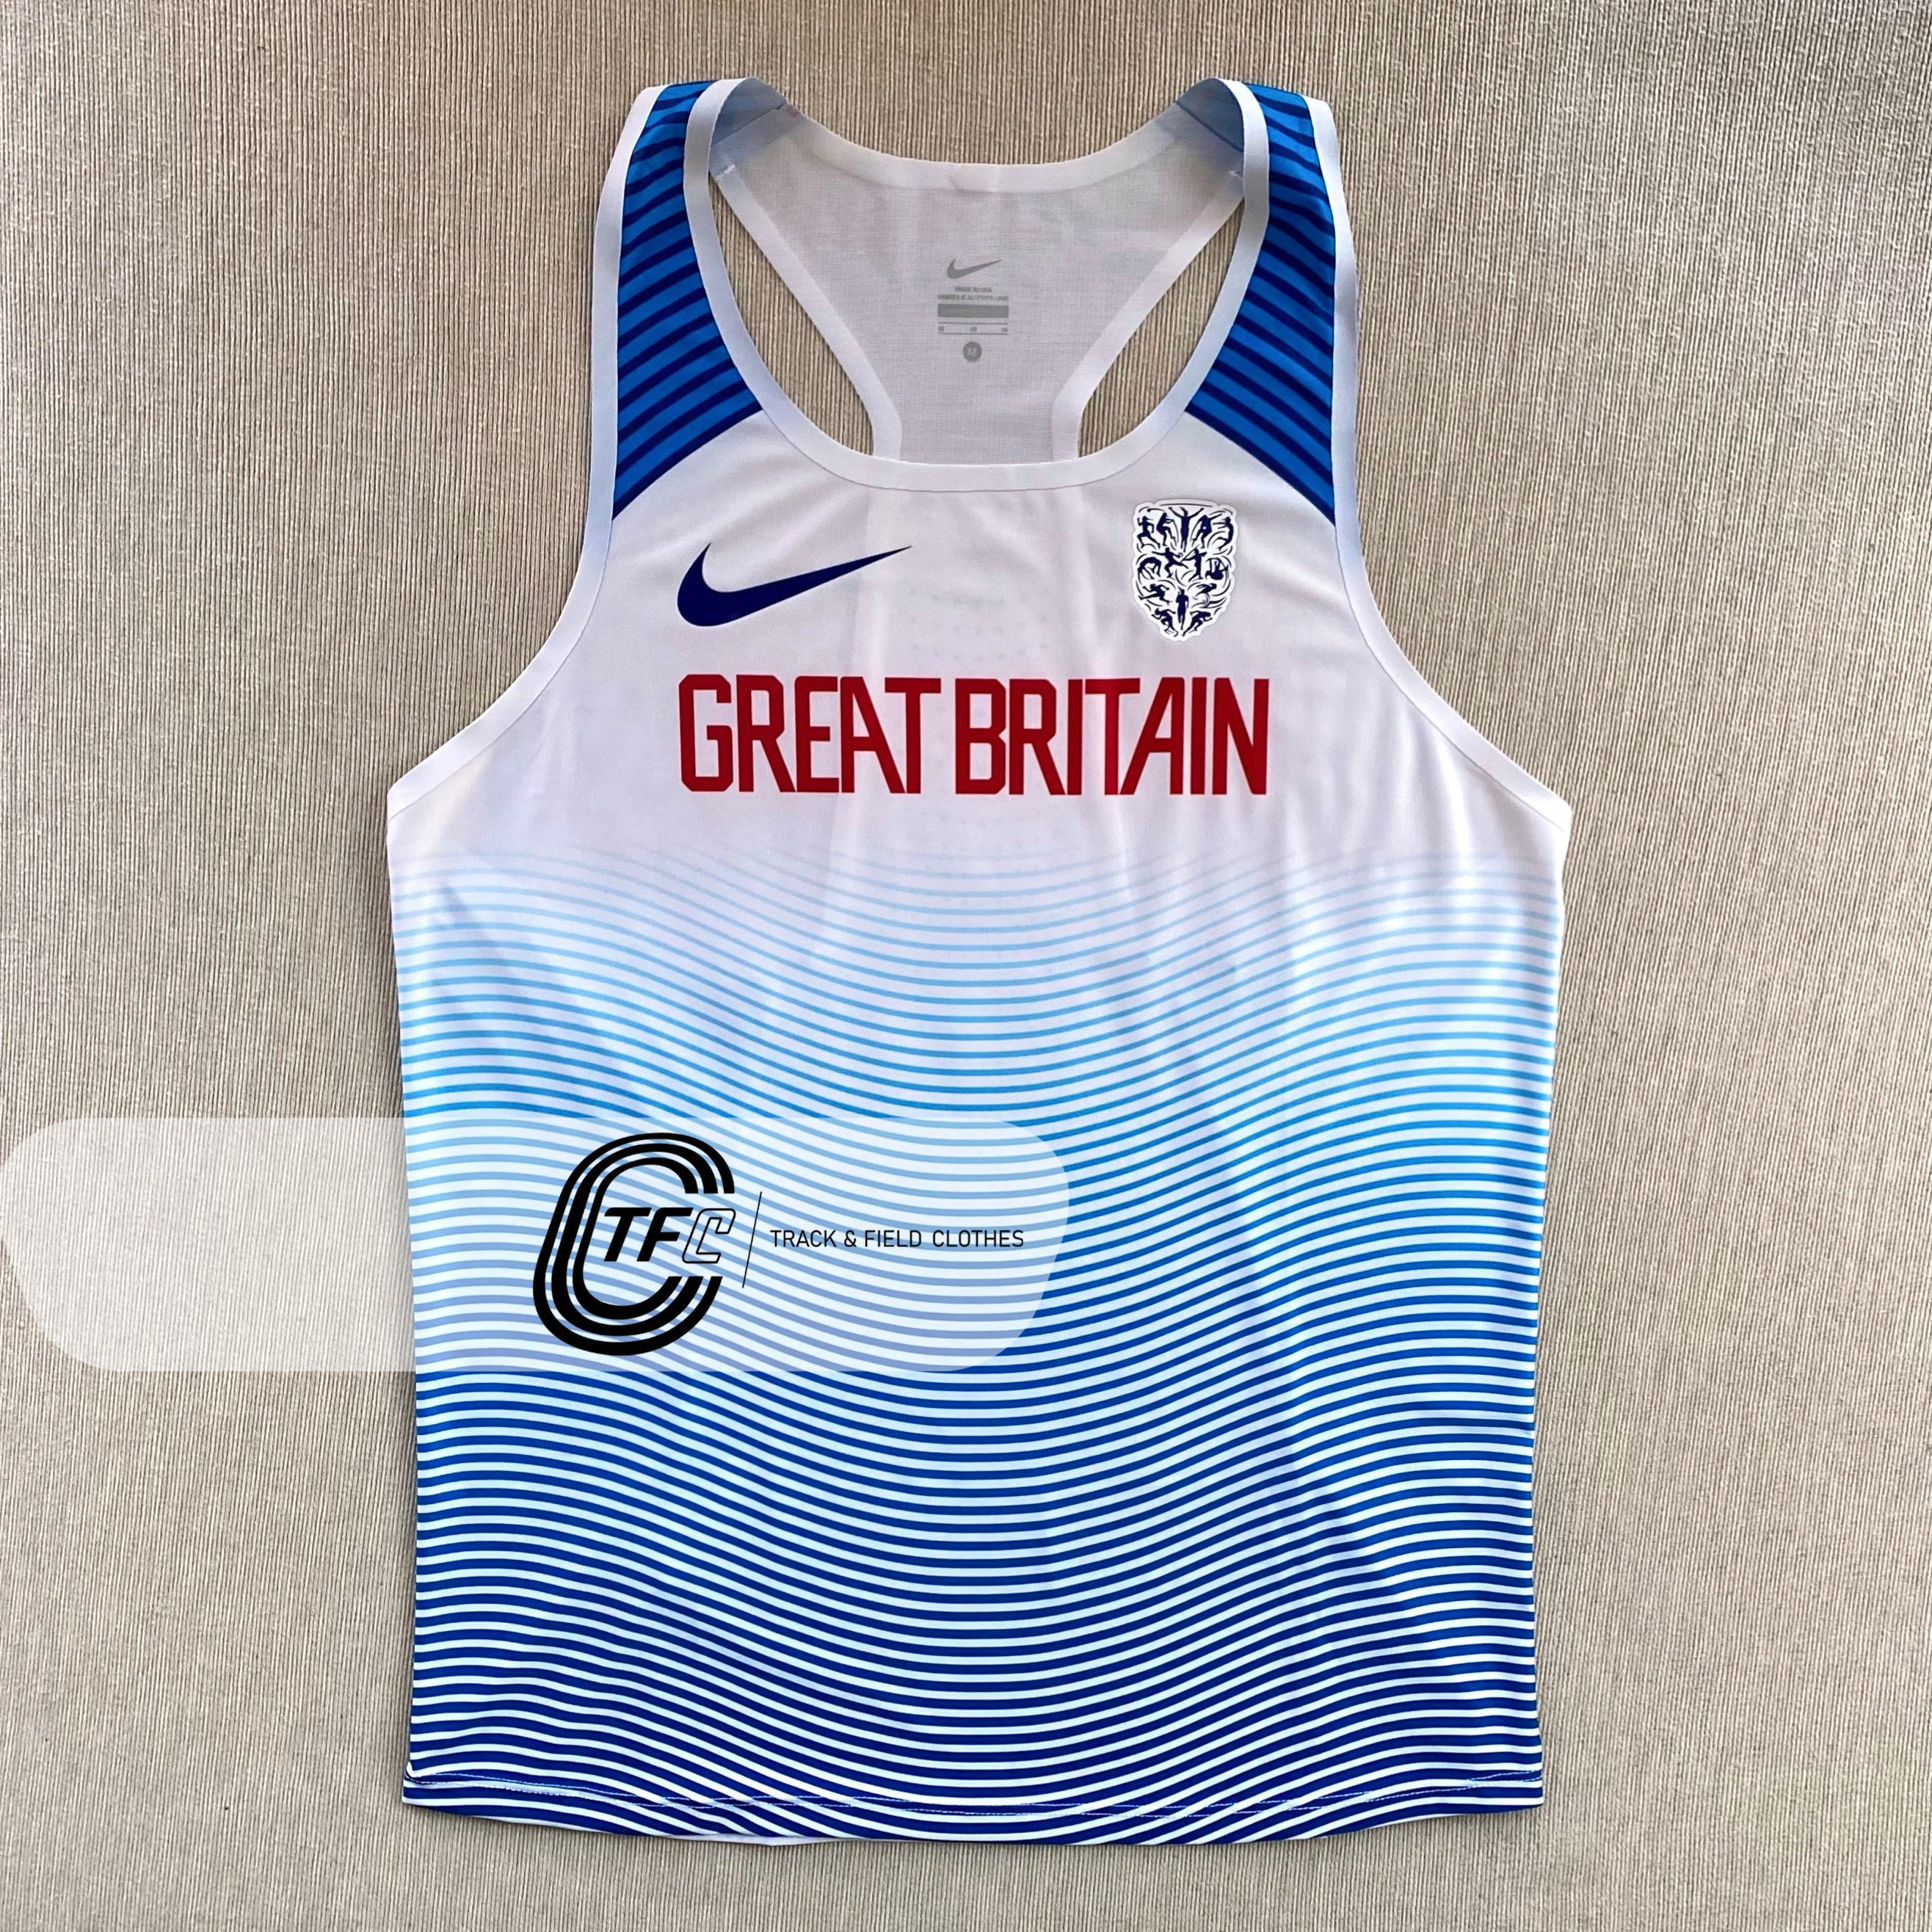 Nike 2019 Great Britain Team Pro Elite Cut Singlet | Trackandfieldclothes